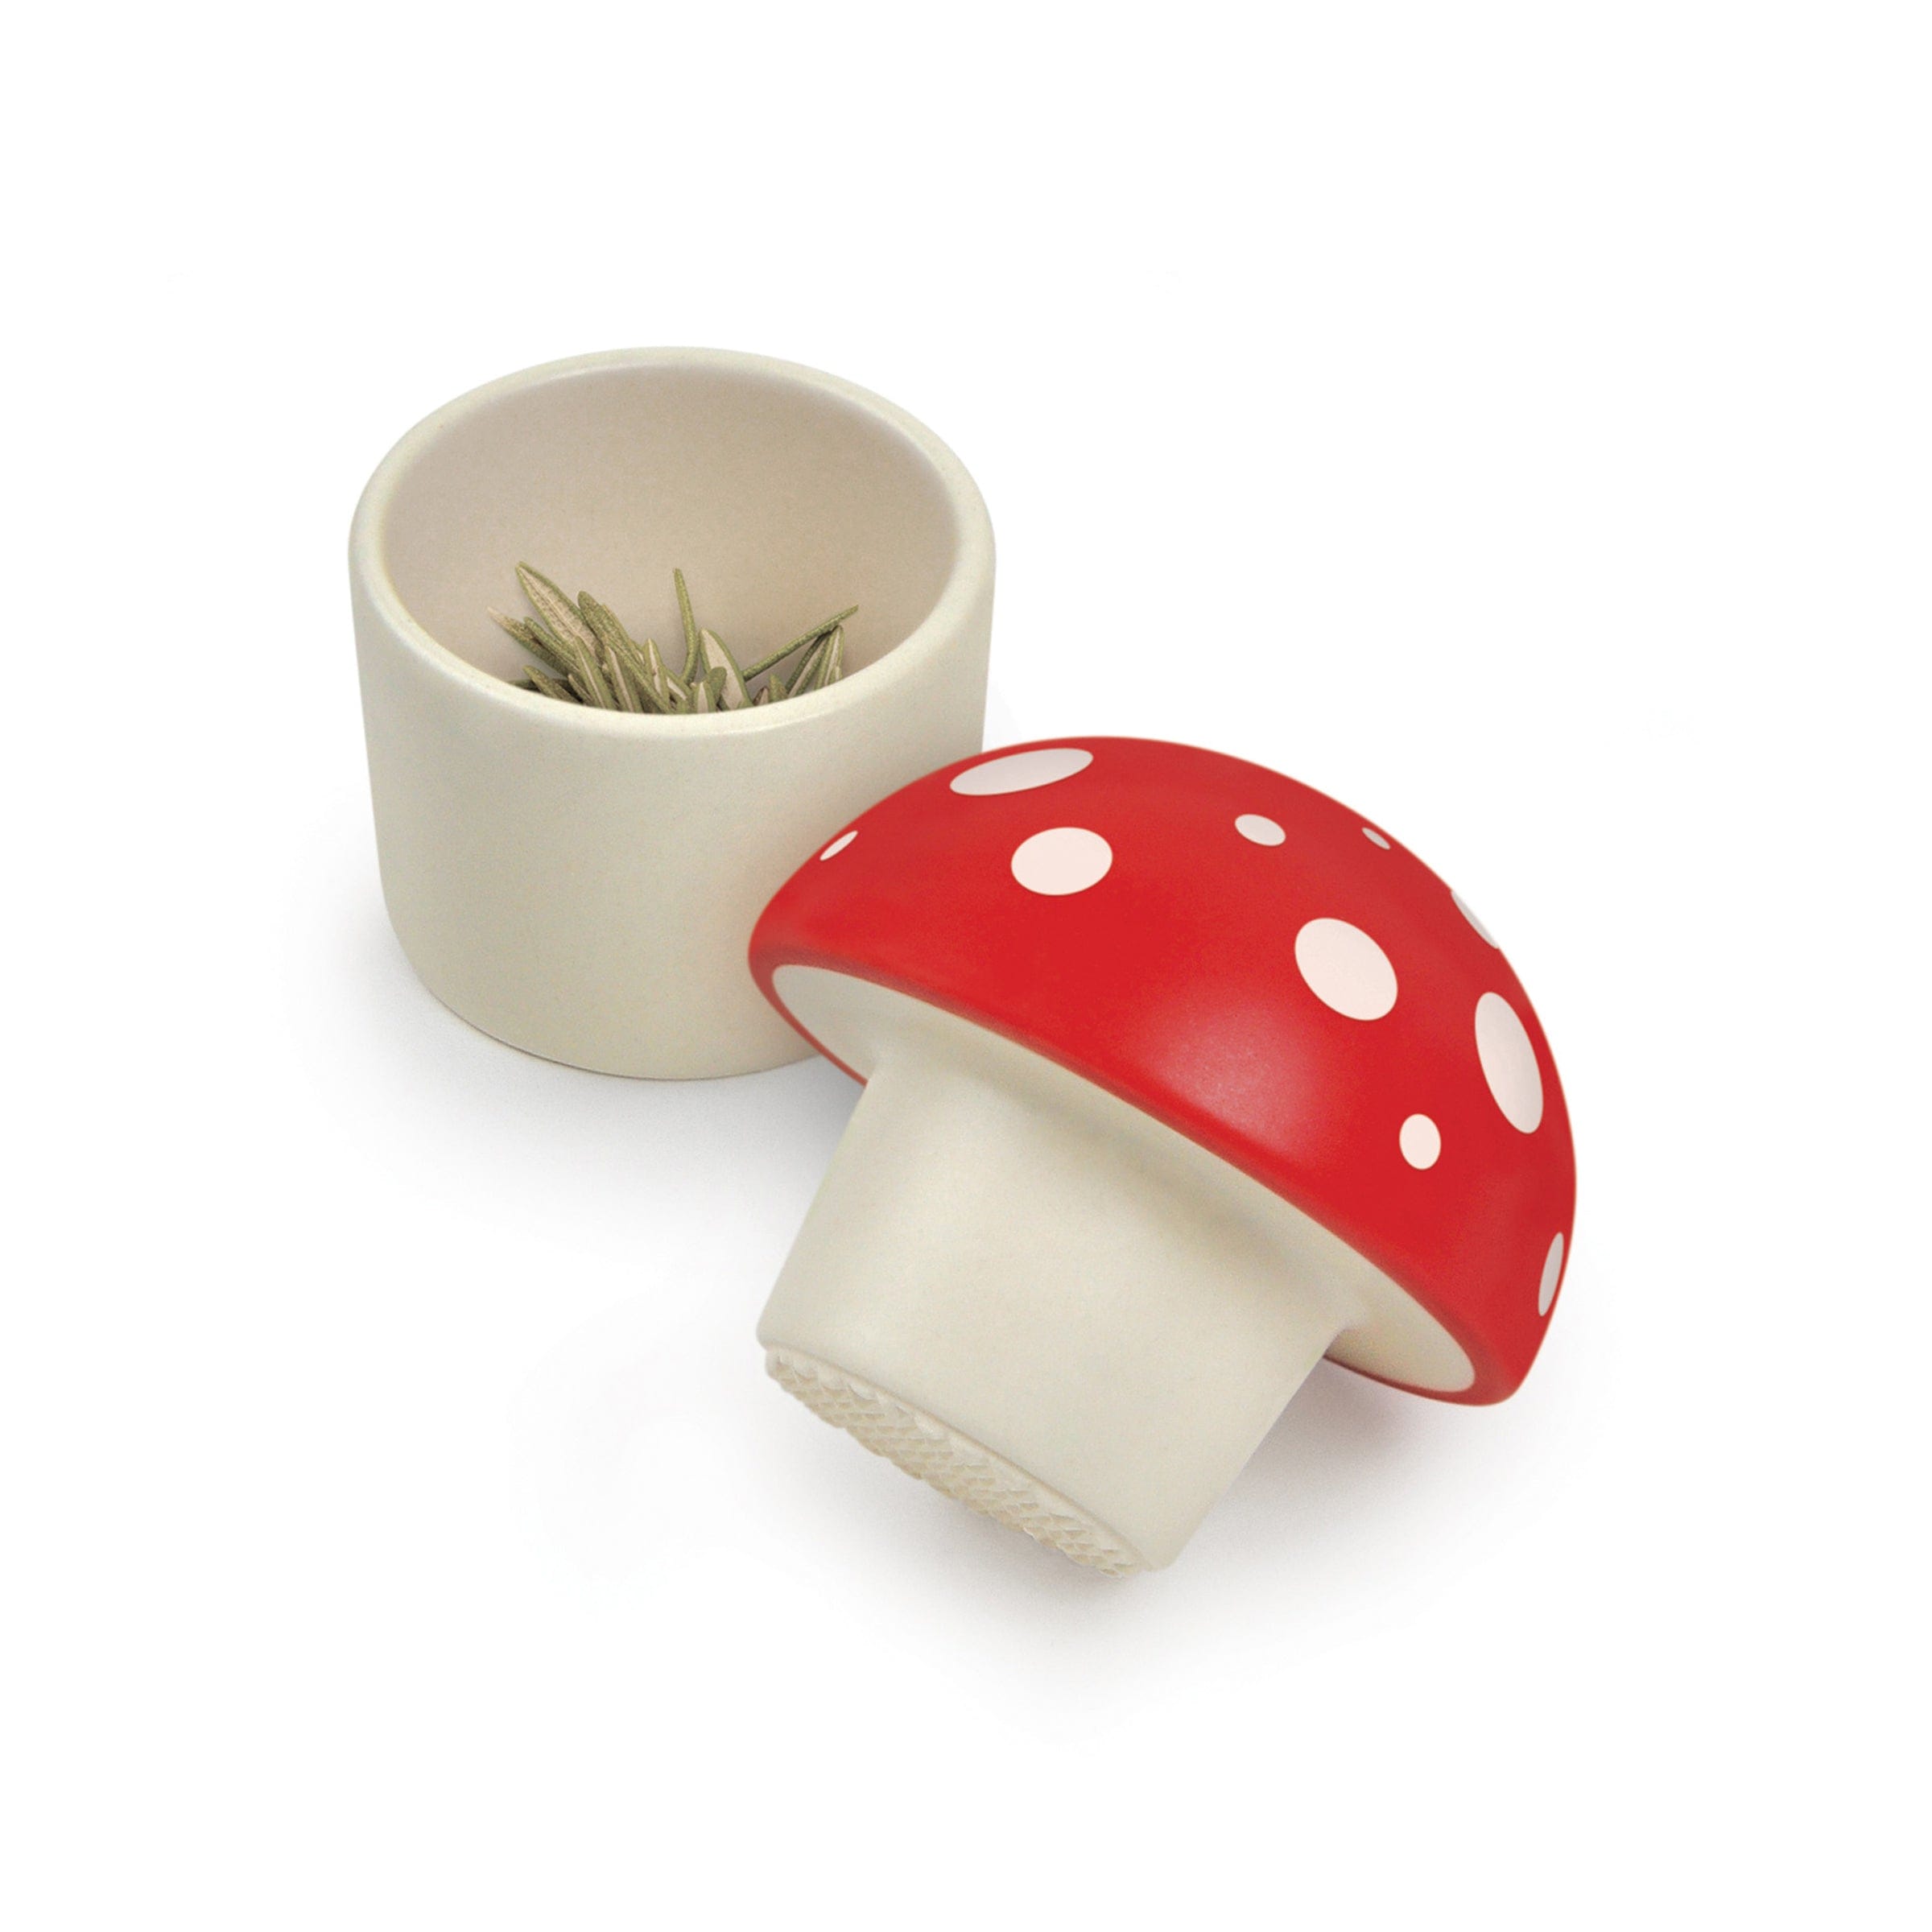 Fred & Friends Super Useful Tray - Mushrooms